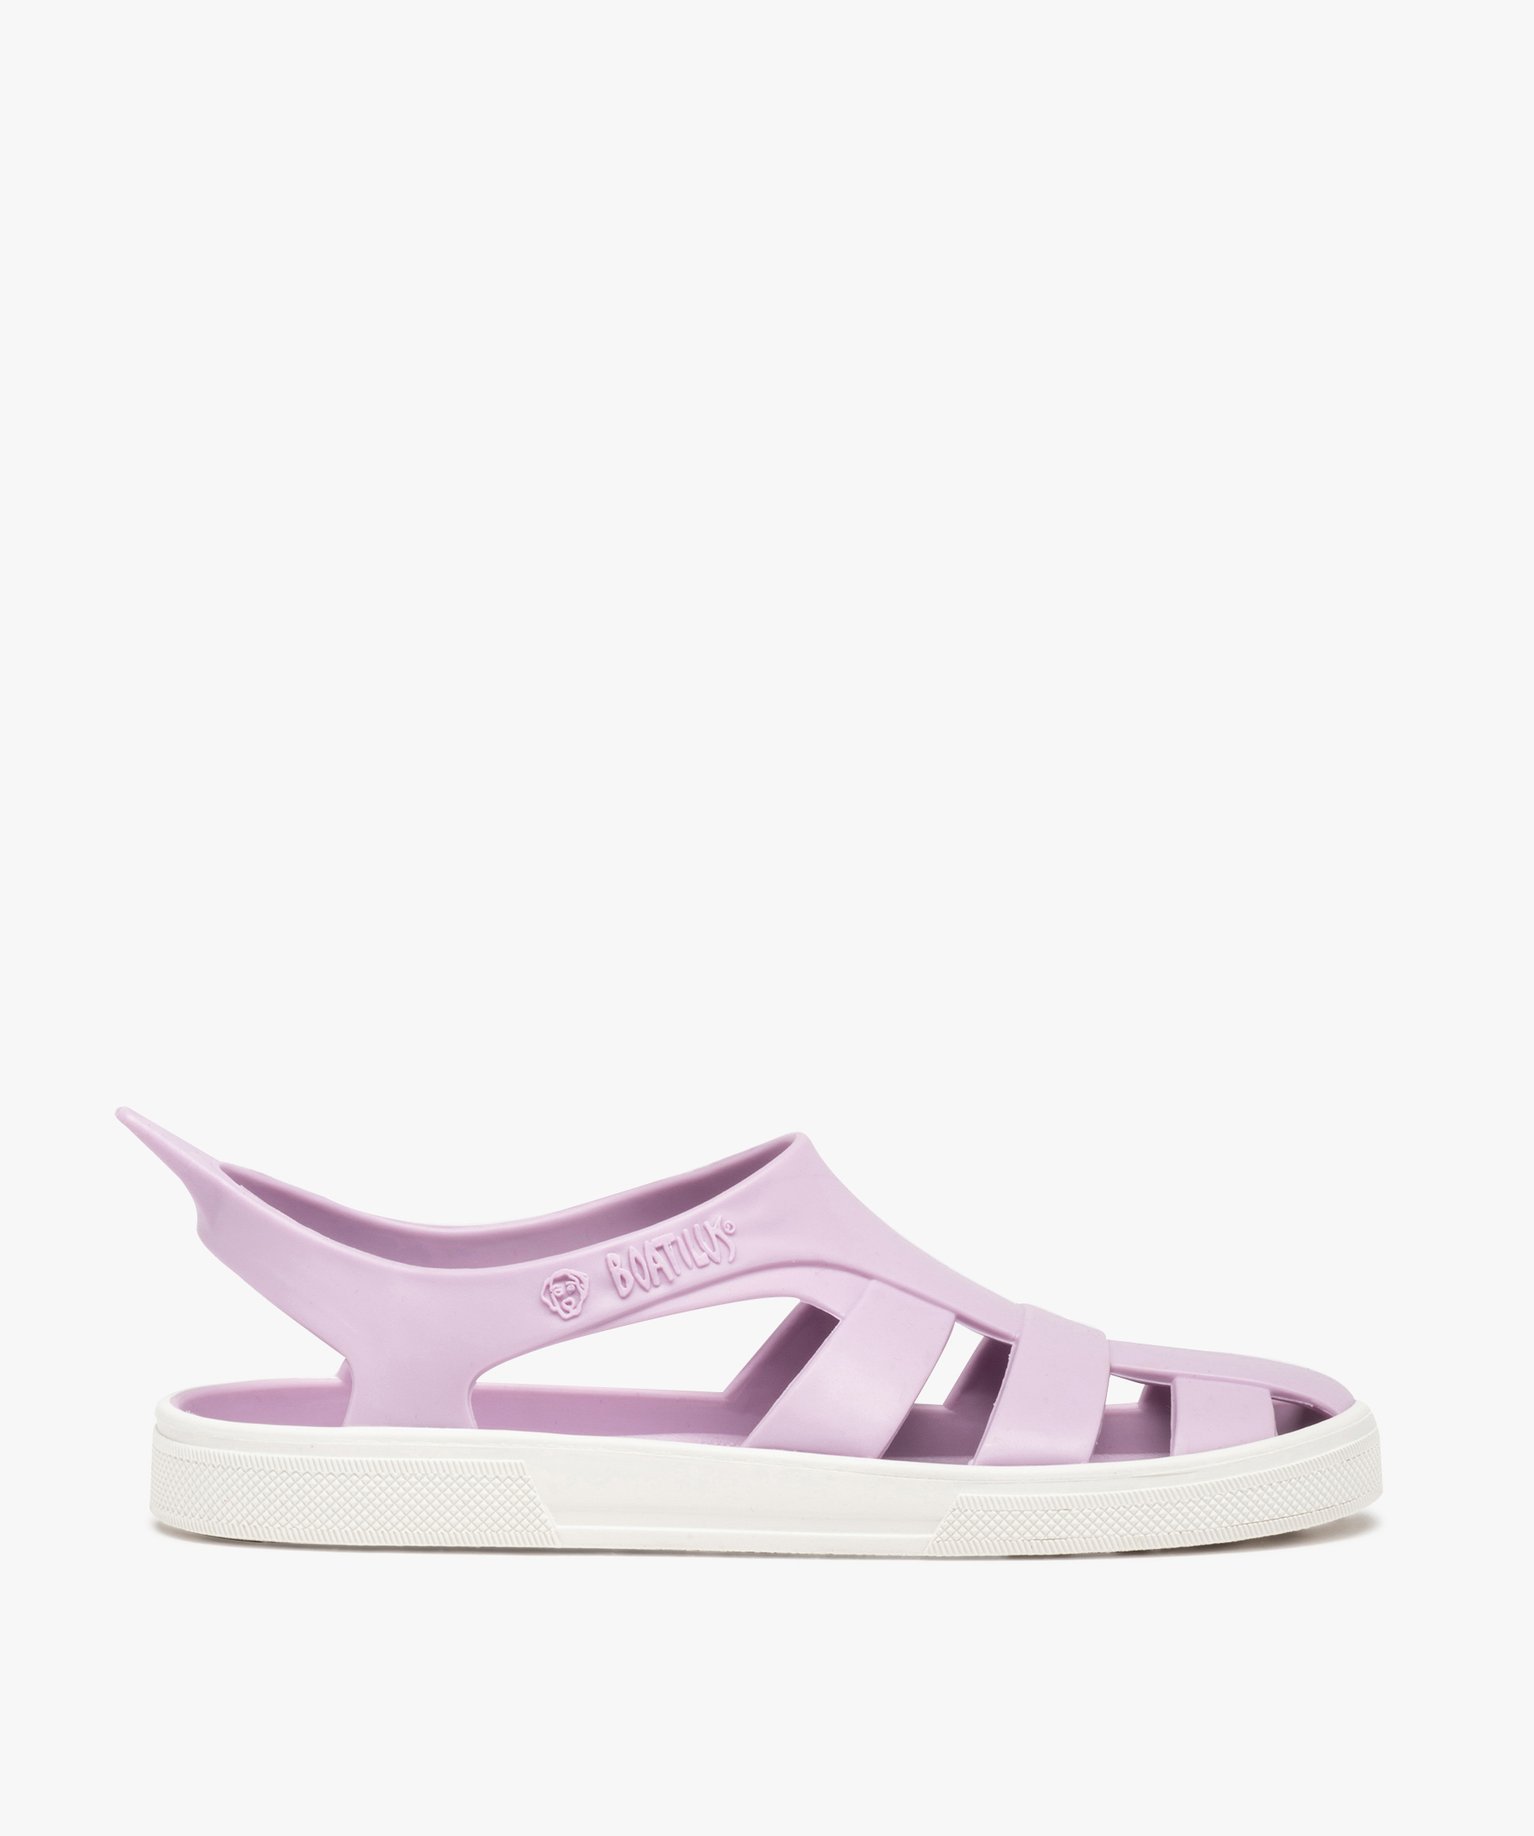 sandales de plage fille extra souples - boatilus violet